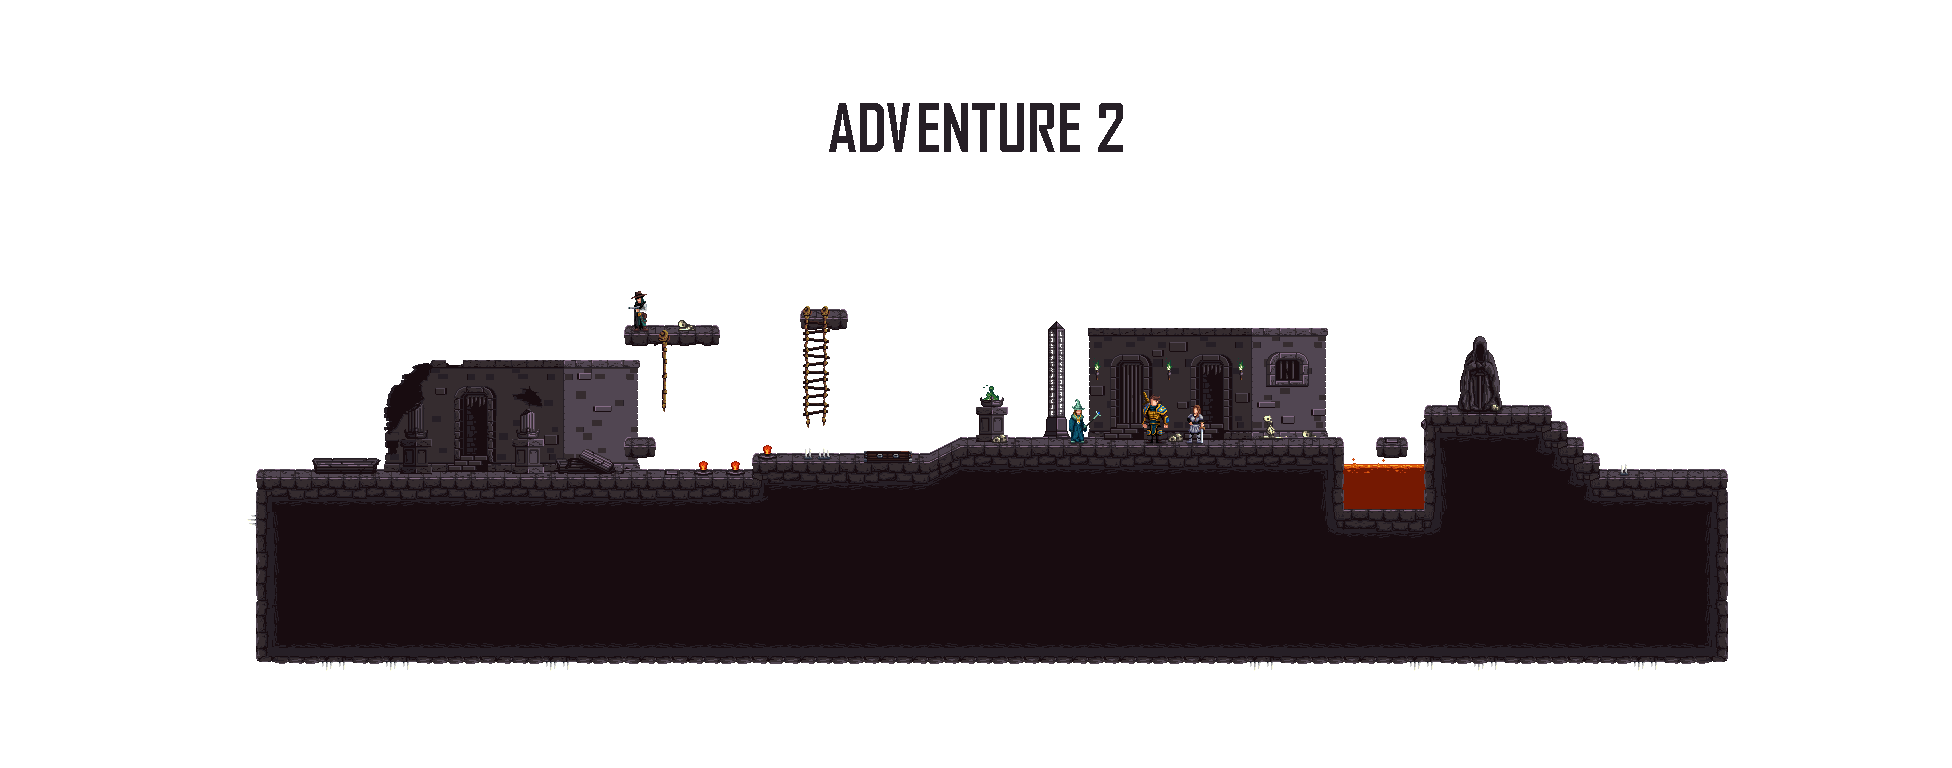 Adventure 2: Cave Tileset